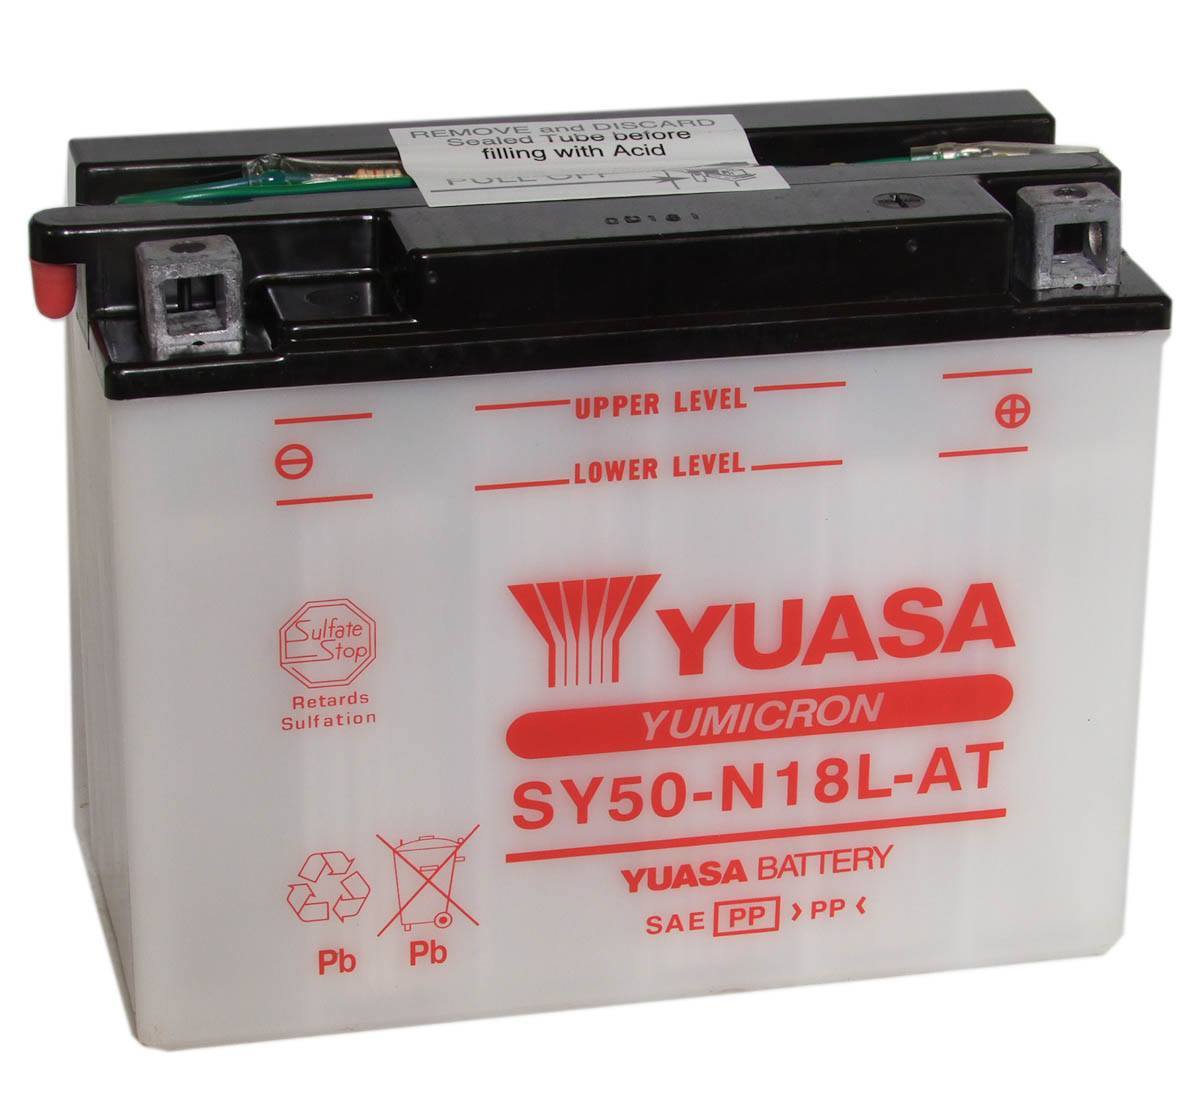 Yuasa SY50-N18L-AT 12V Motorbike Battery